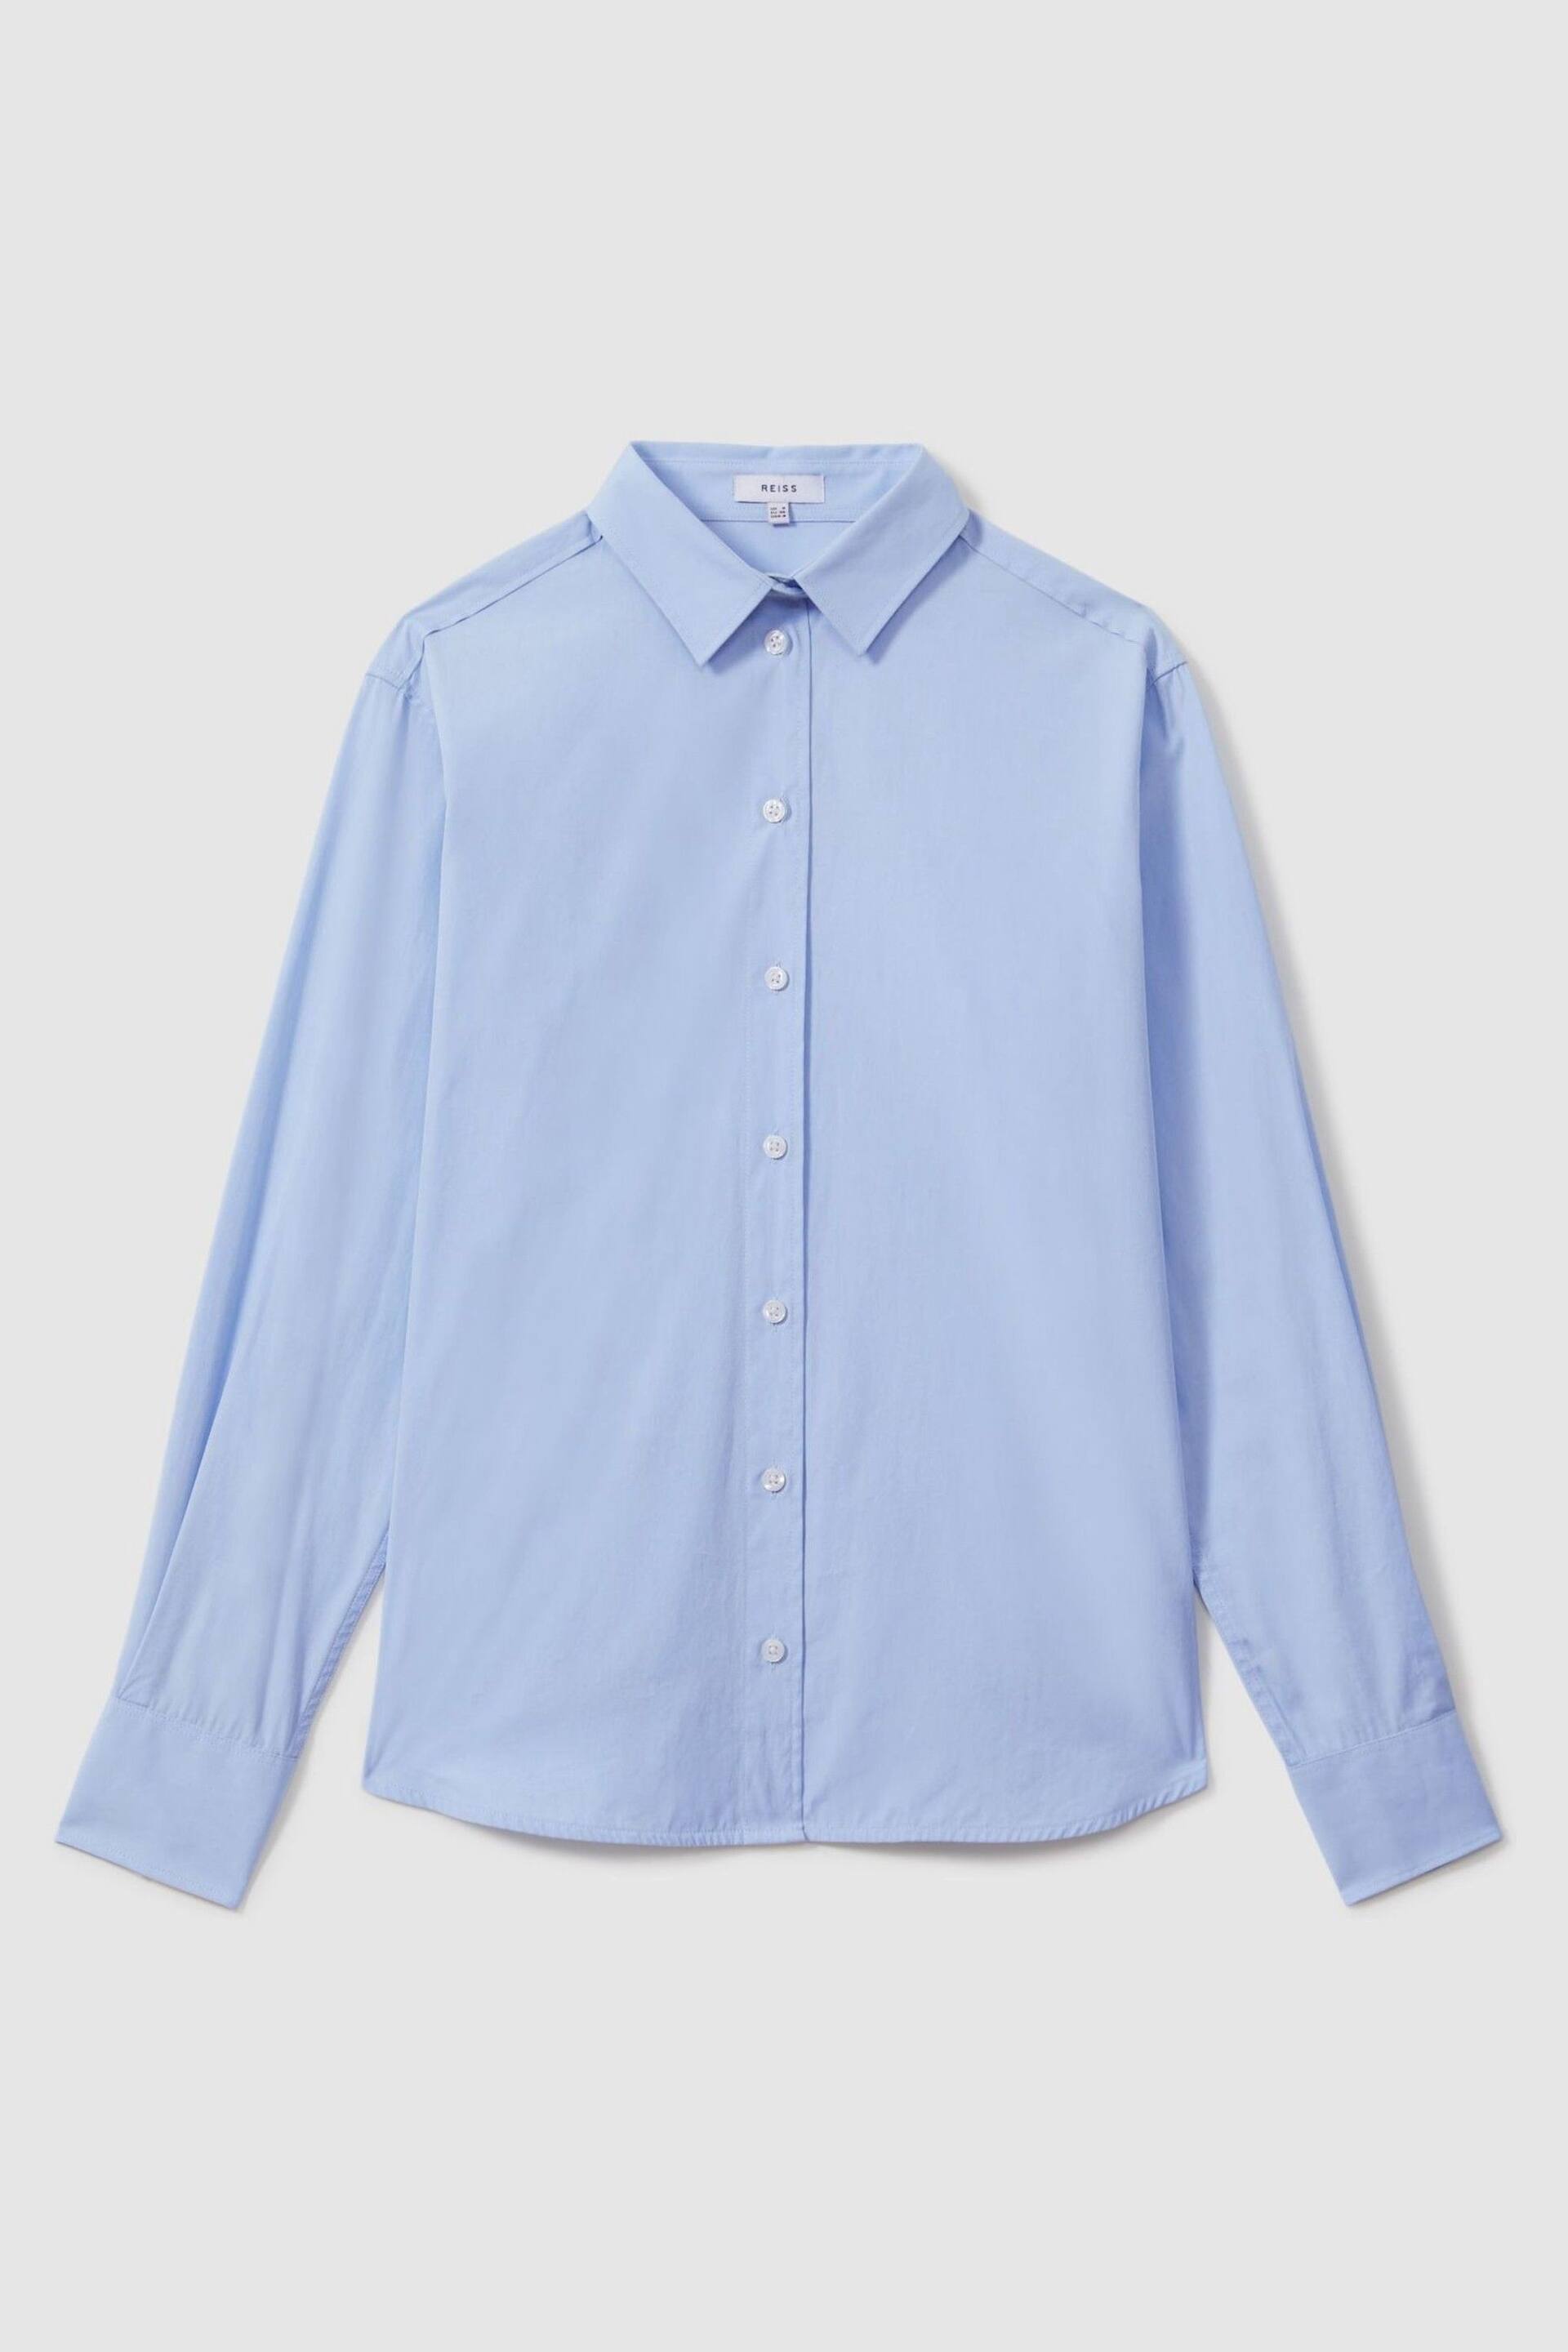 Reiss Blue Jenny Cotton Poplin Shirt - Image 2 of 7